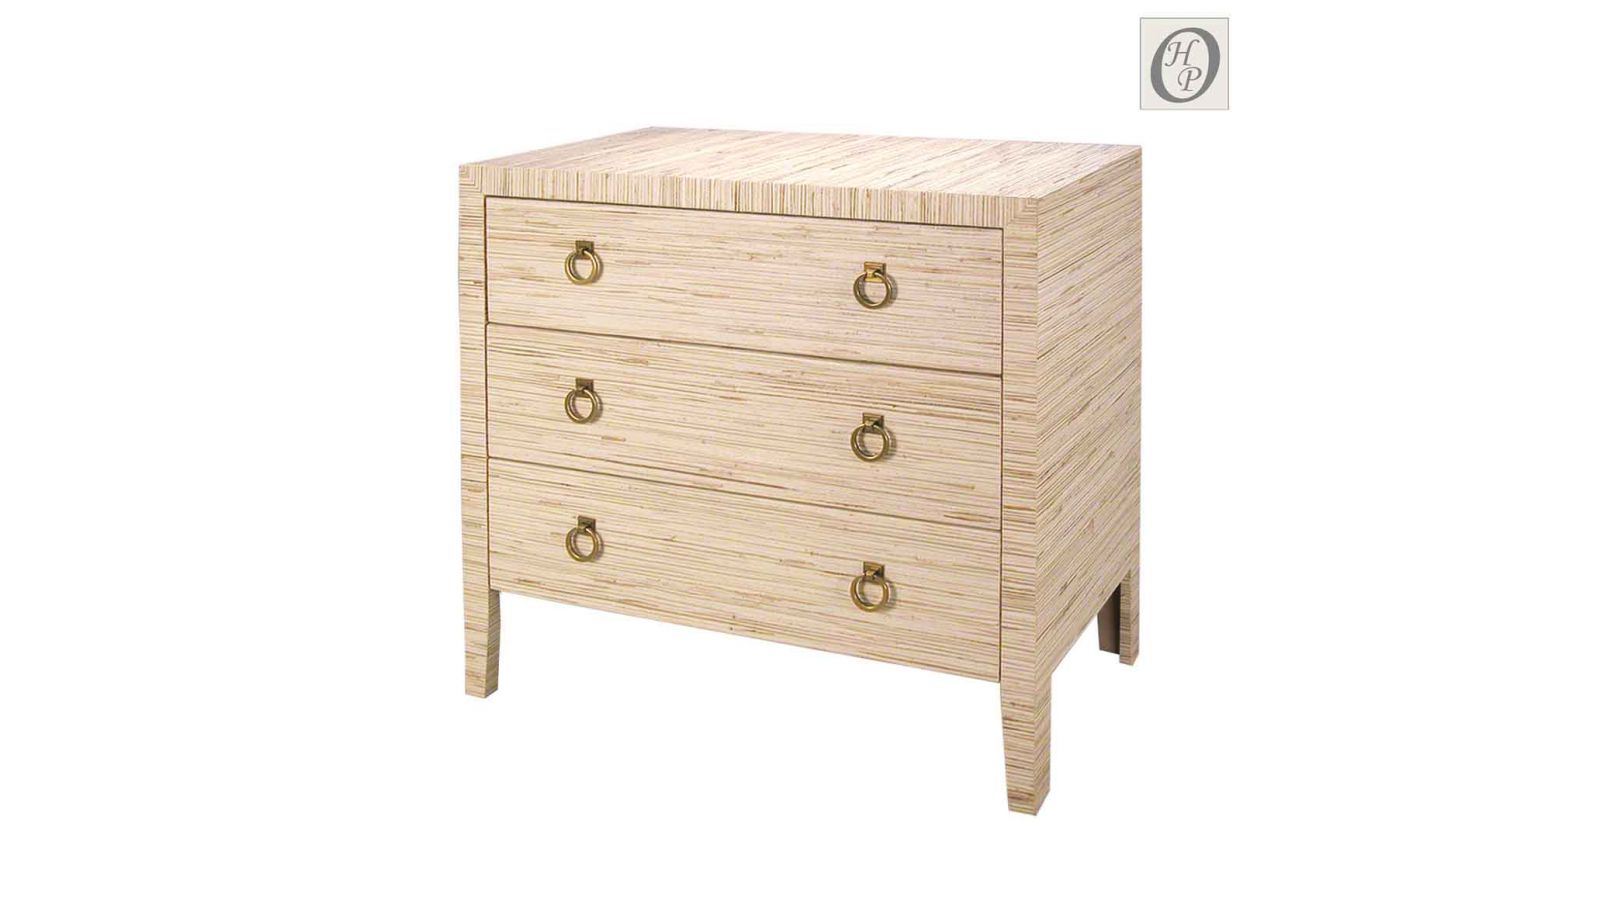 H1496 - Belwood 3 drawer chest